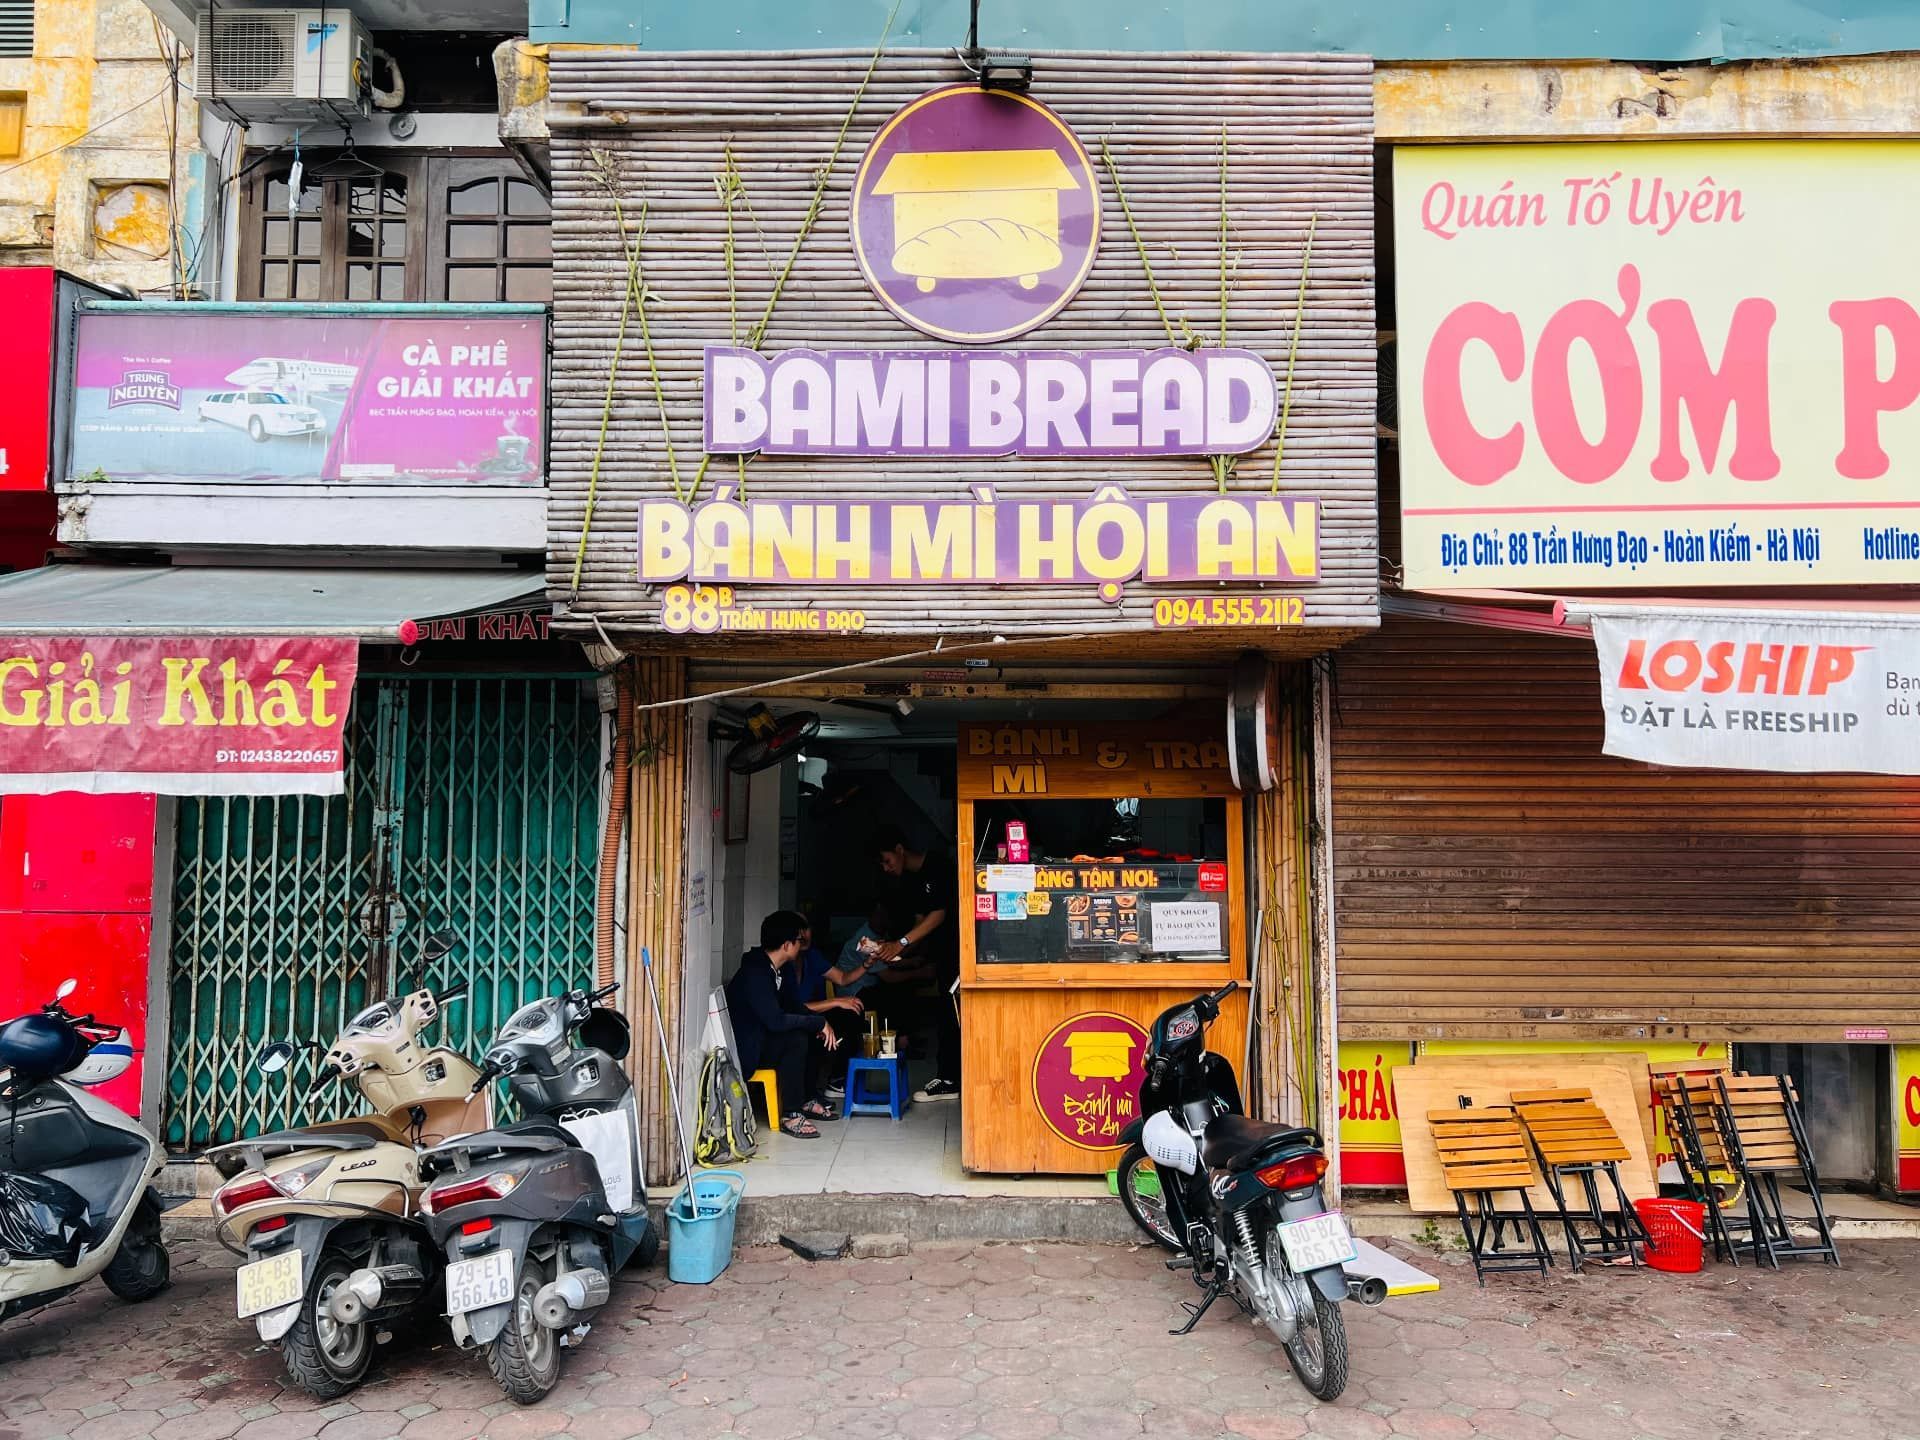 Photograph of Banh Mi in Hanoi, Vietnam